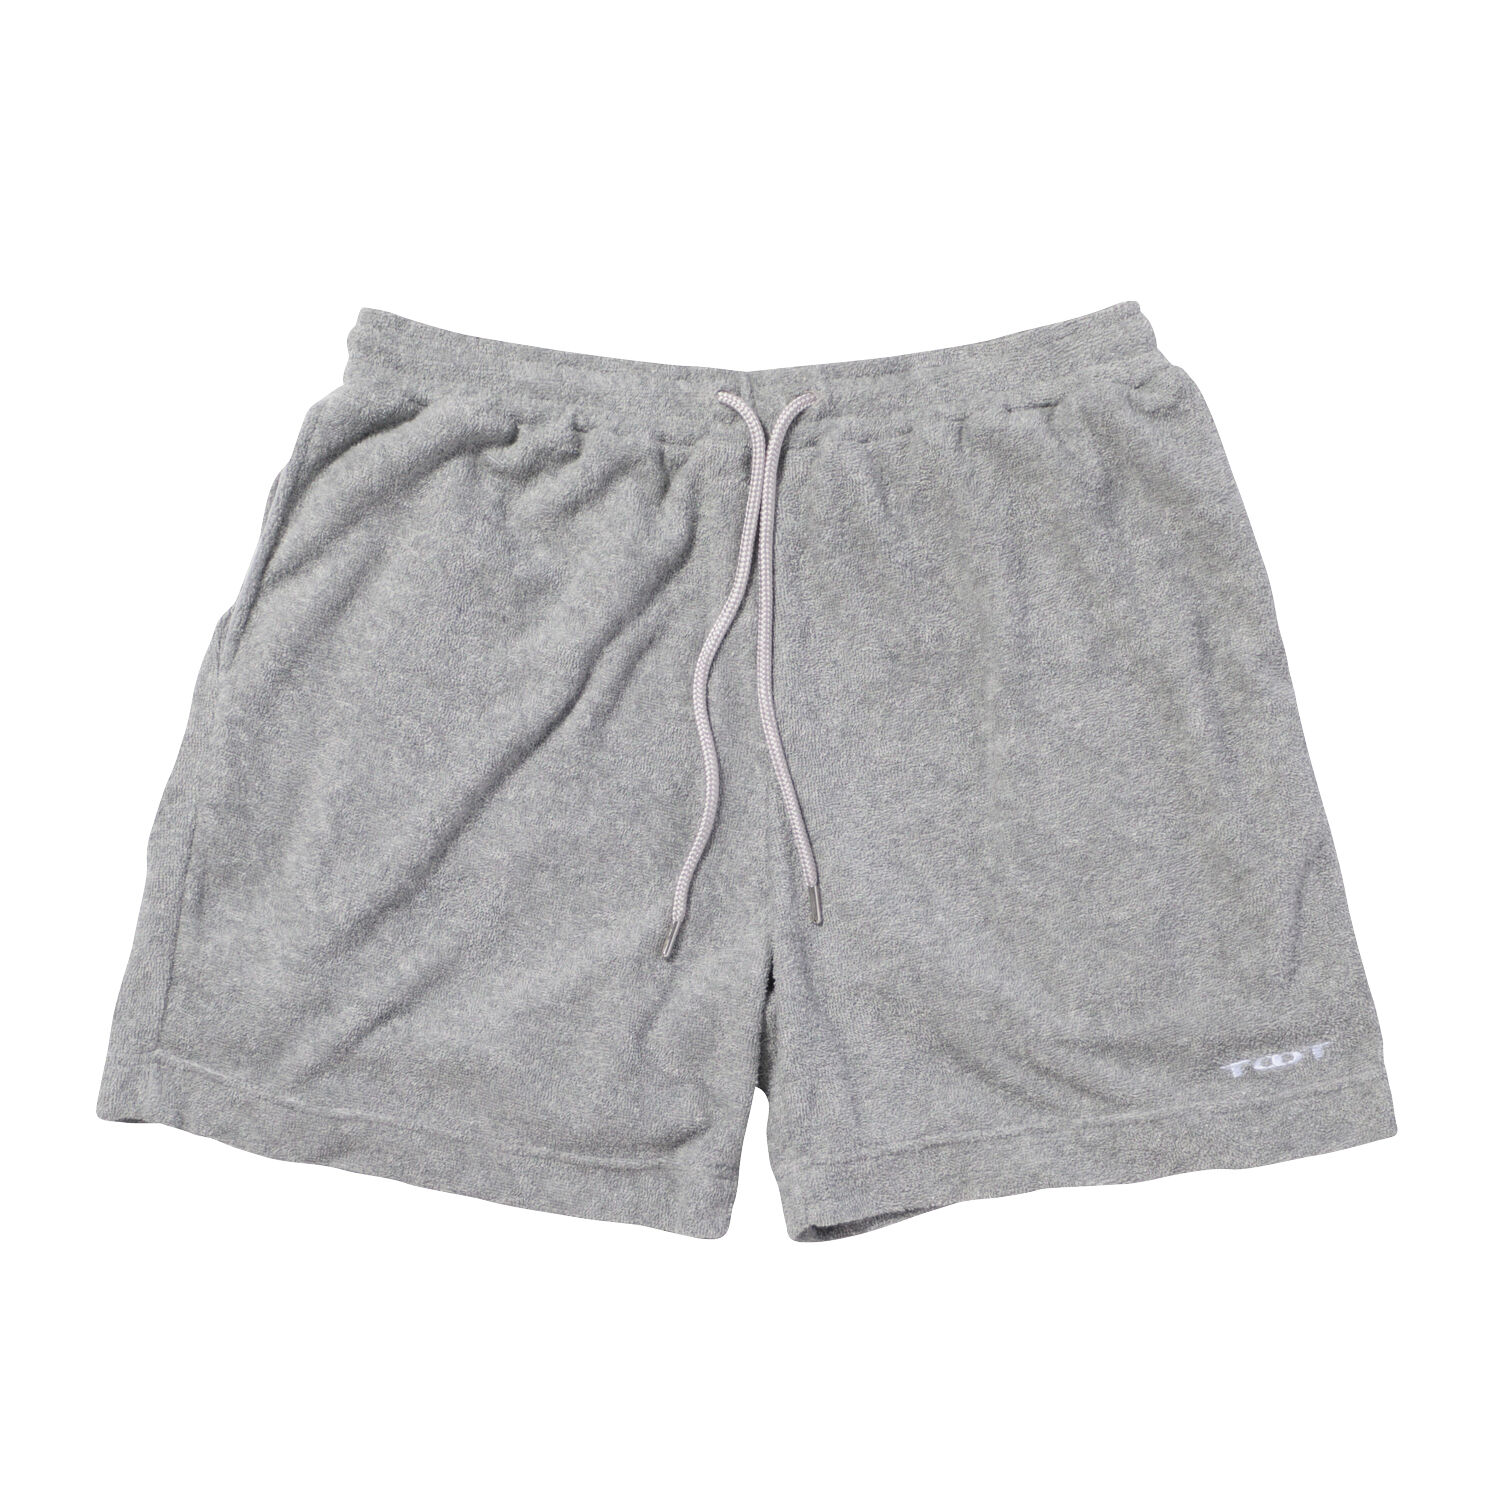 Relaxing Pile Shorts | Men's Underwear brand TOOT official website